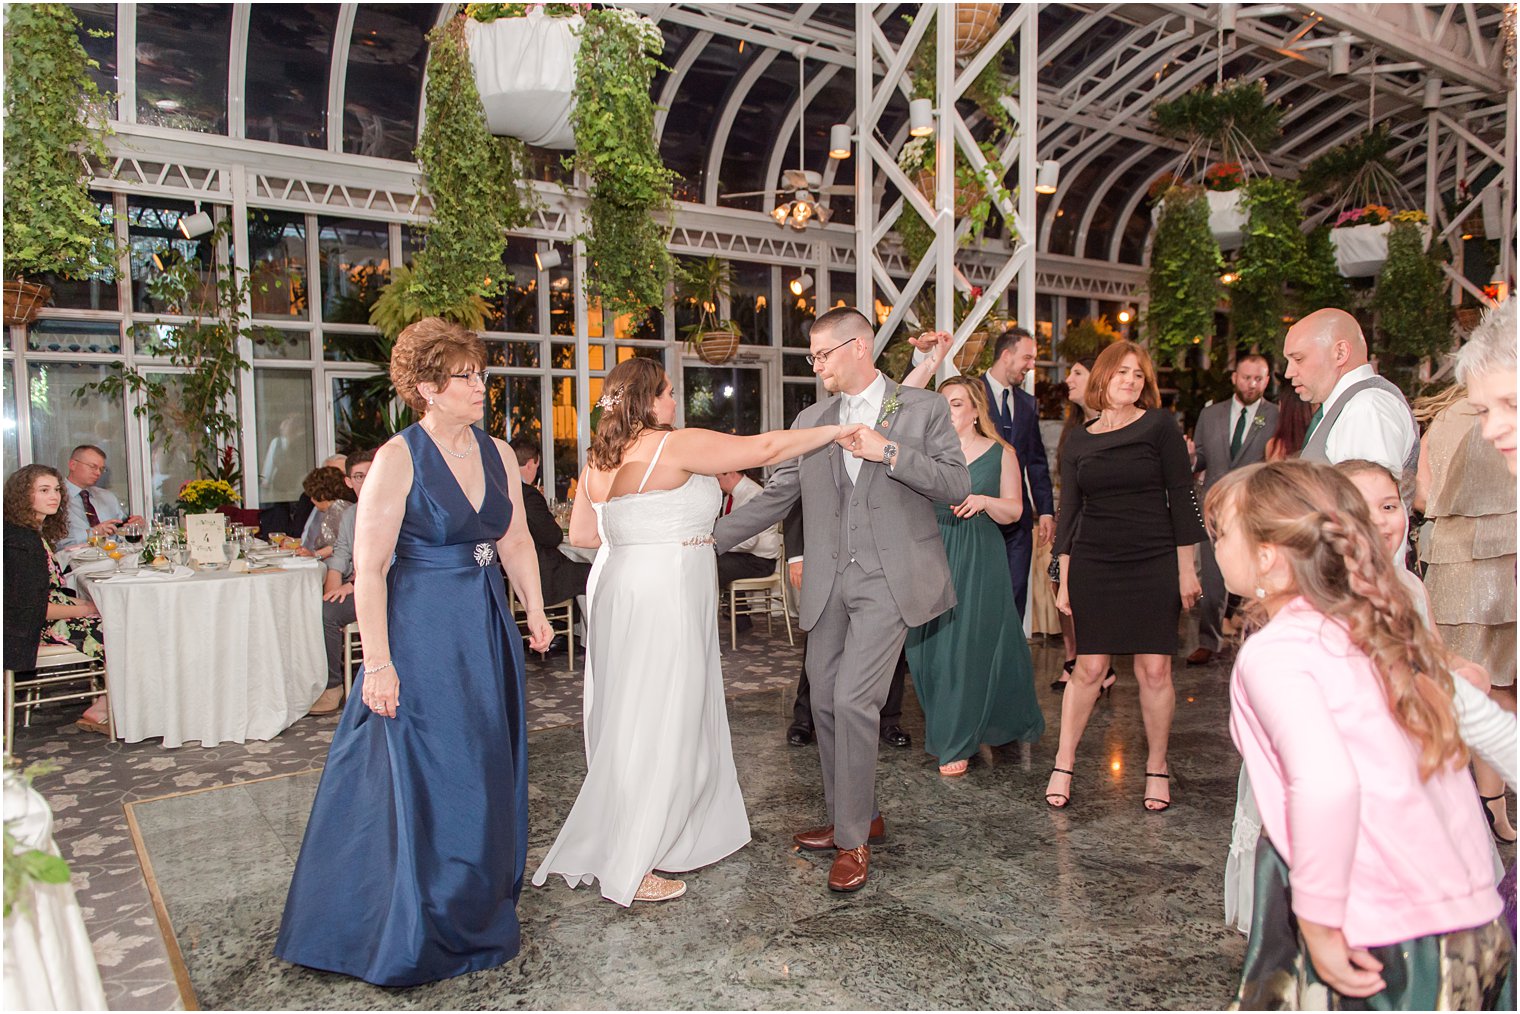 newlyweds dance together during NJ wedding reception at The Madison Hotel